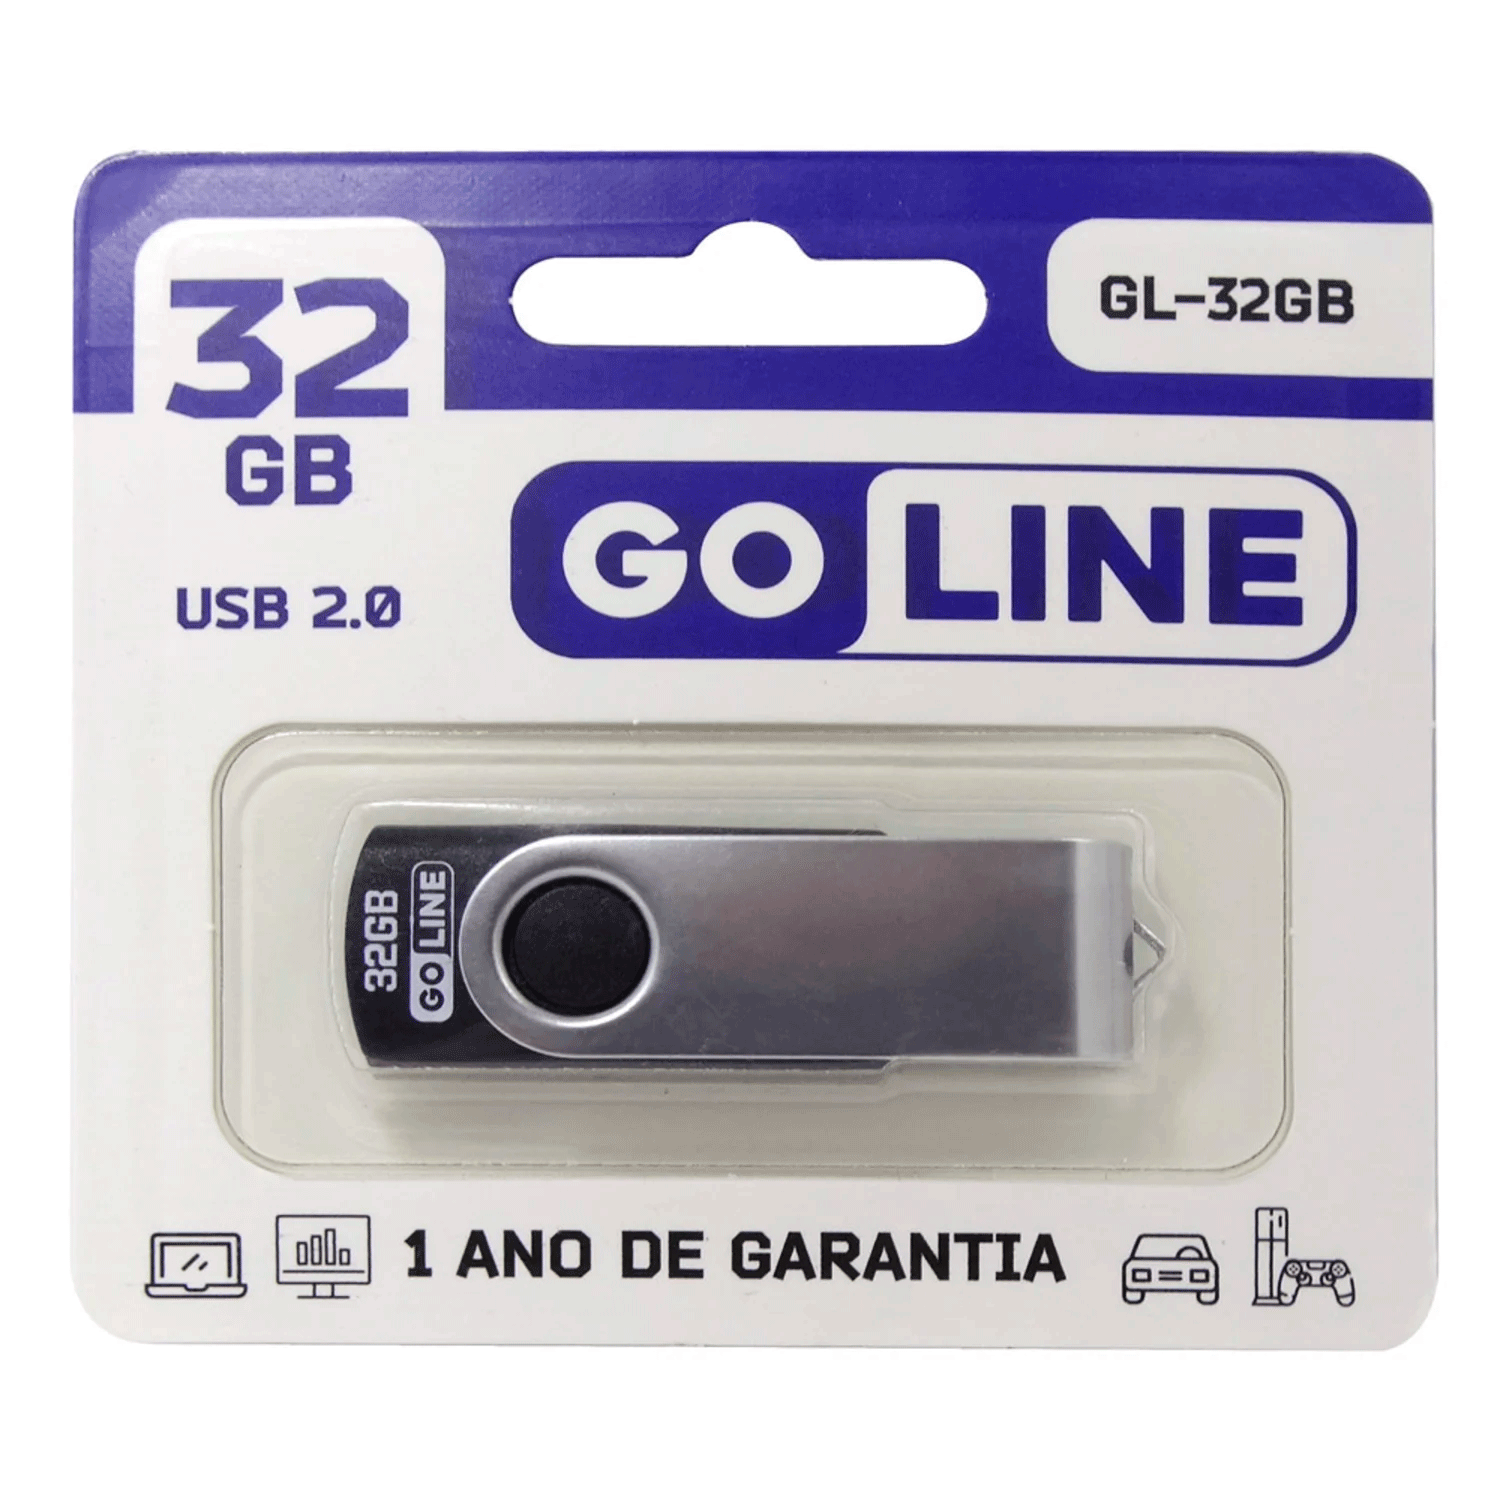 Pendrive Goline GL-32GB 32GB USB 2.0 - Preto